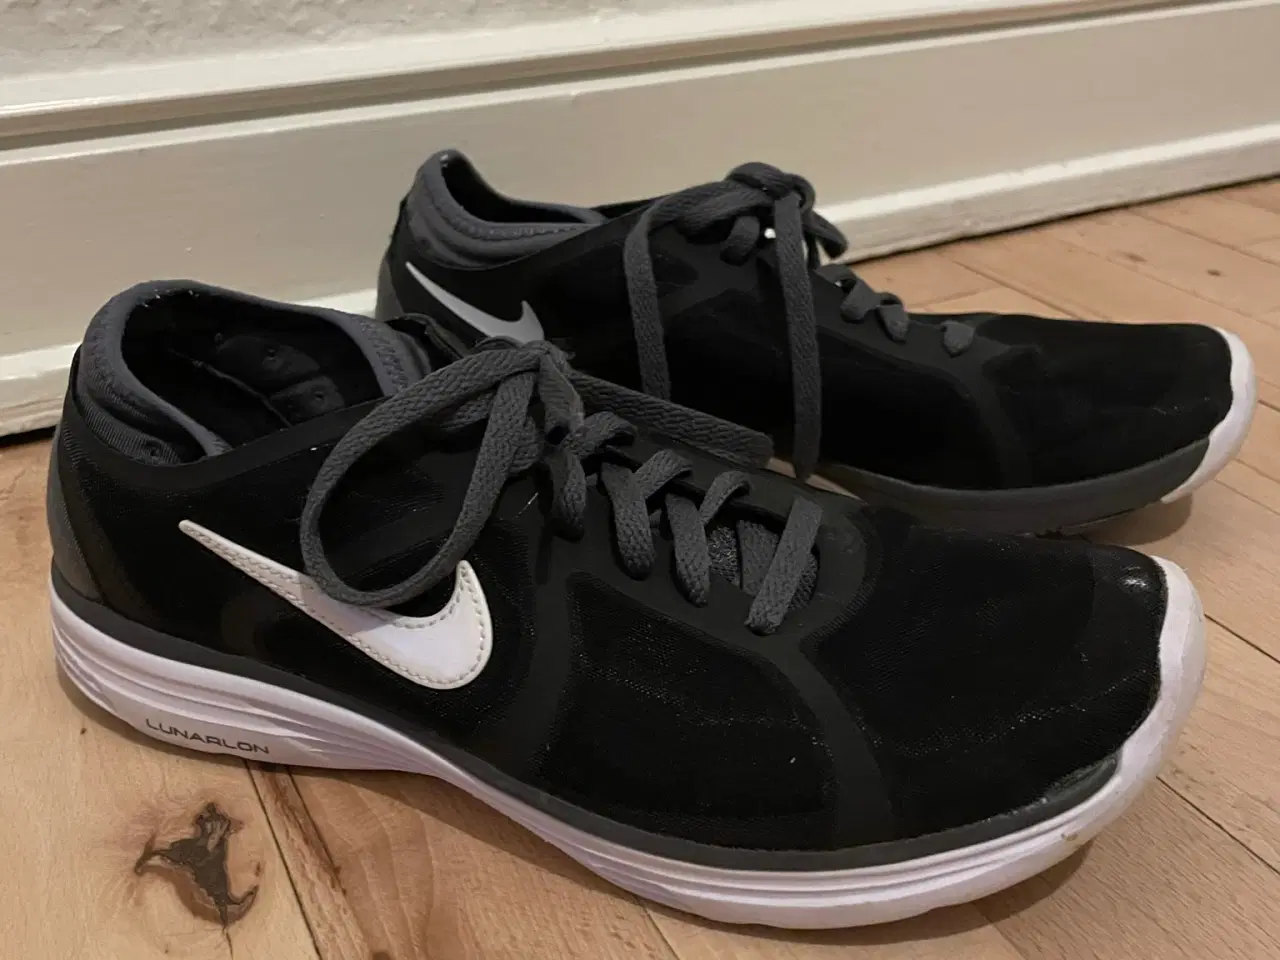 Billede 1 - Nike Lunarlon løbesko i sort 